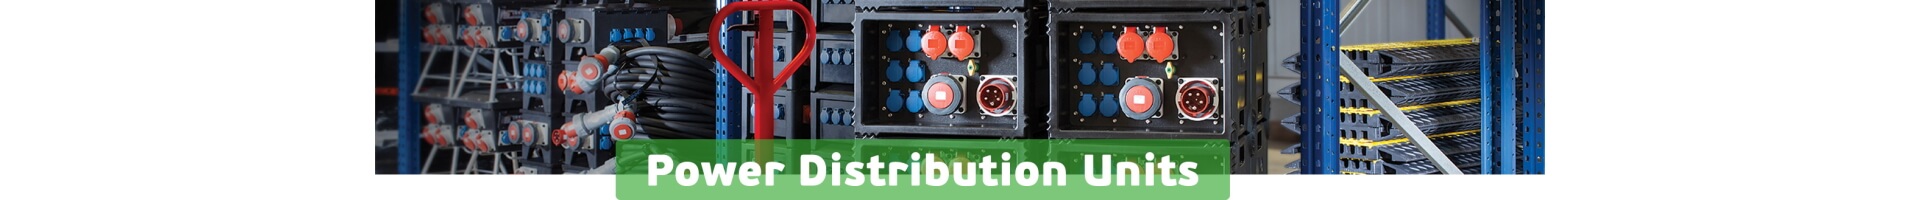 Power Distribution Units